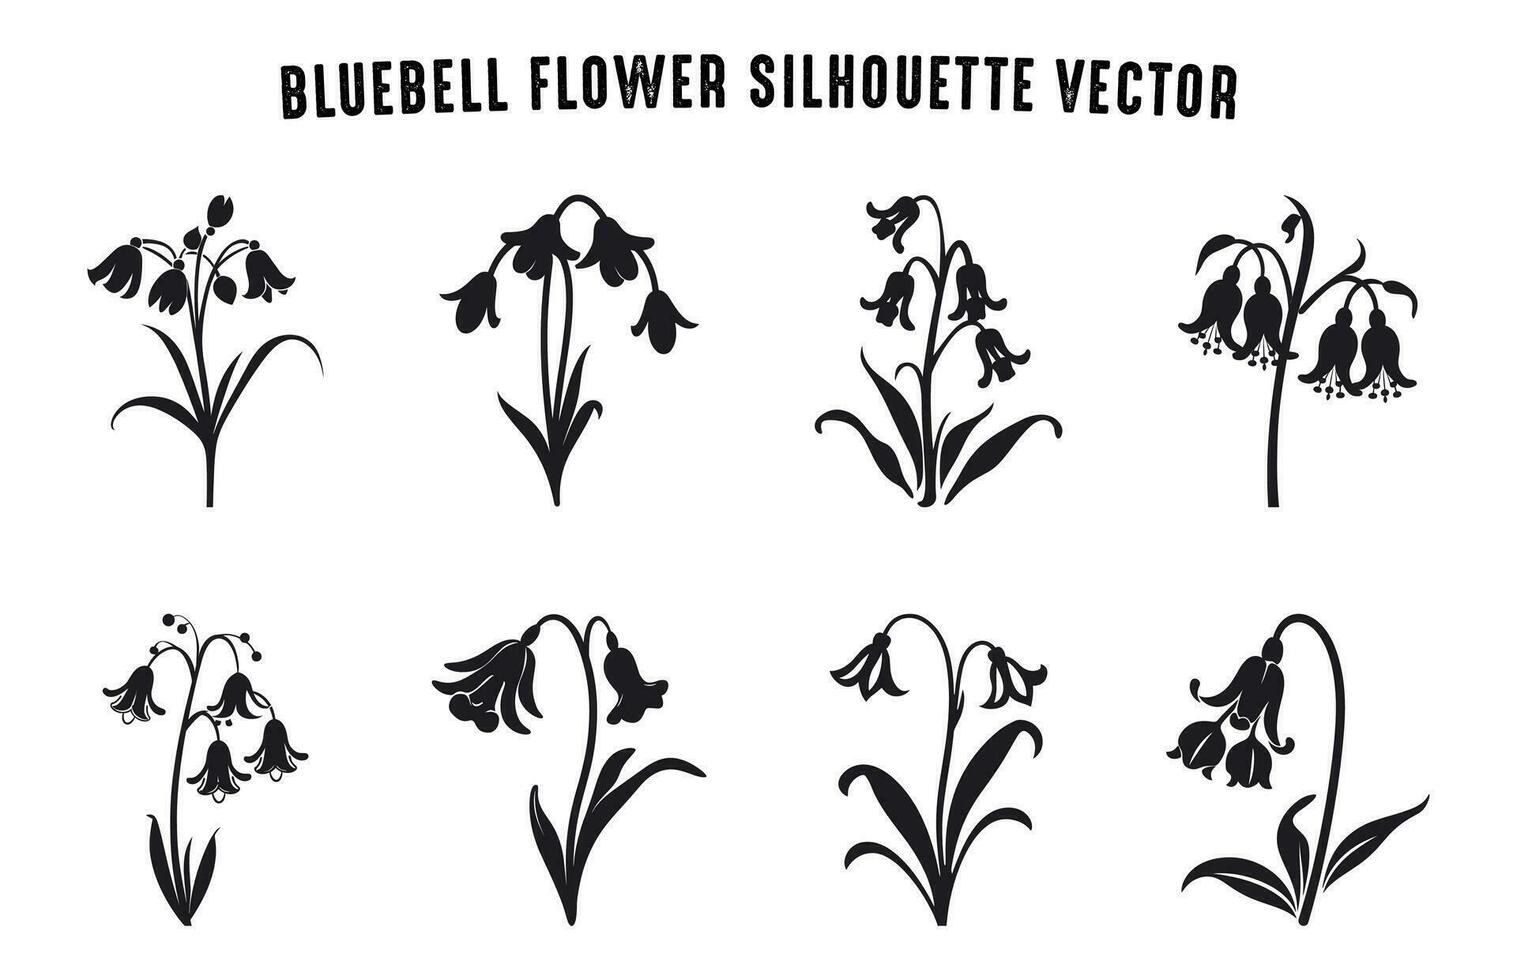 klokje bloem silhouet vector set, klokje bloemen clip art bundel